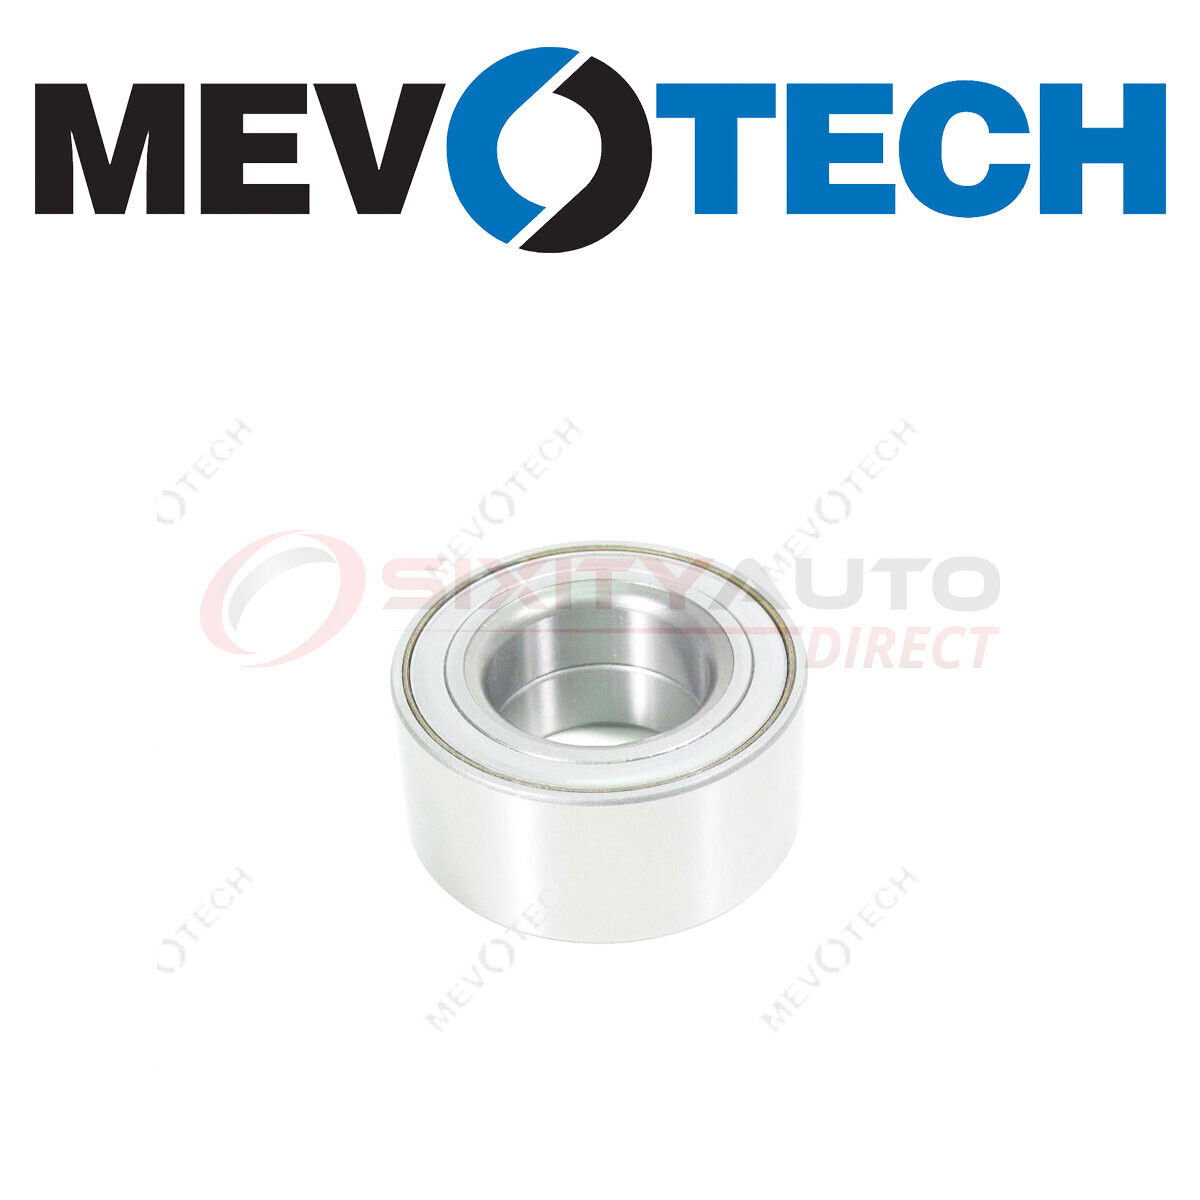 Mevotech Wheel Bearing for 1995-2000 Mercury Mystique 2.0L 2.5L L4 V6 - Axle ps